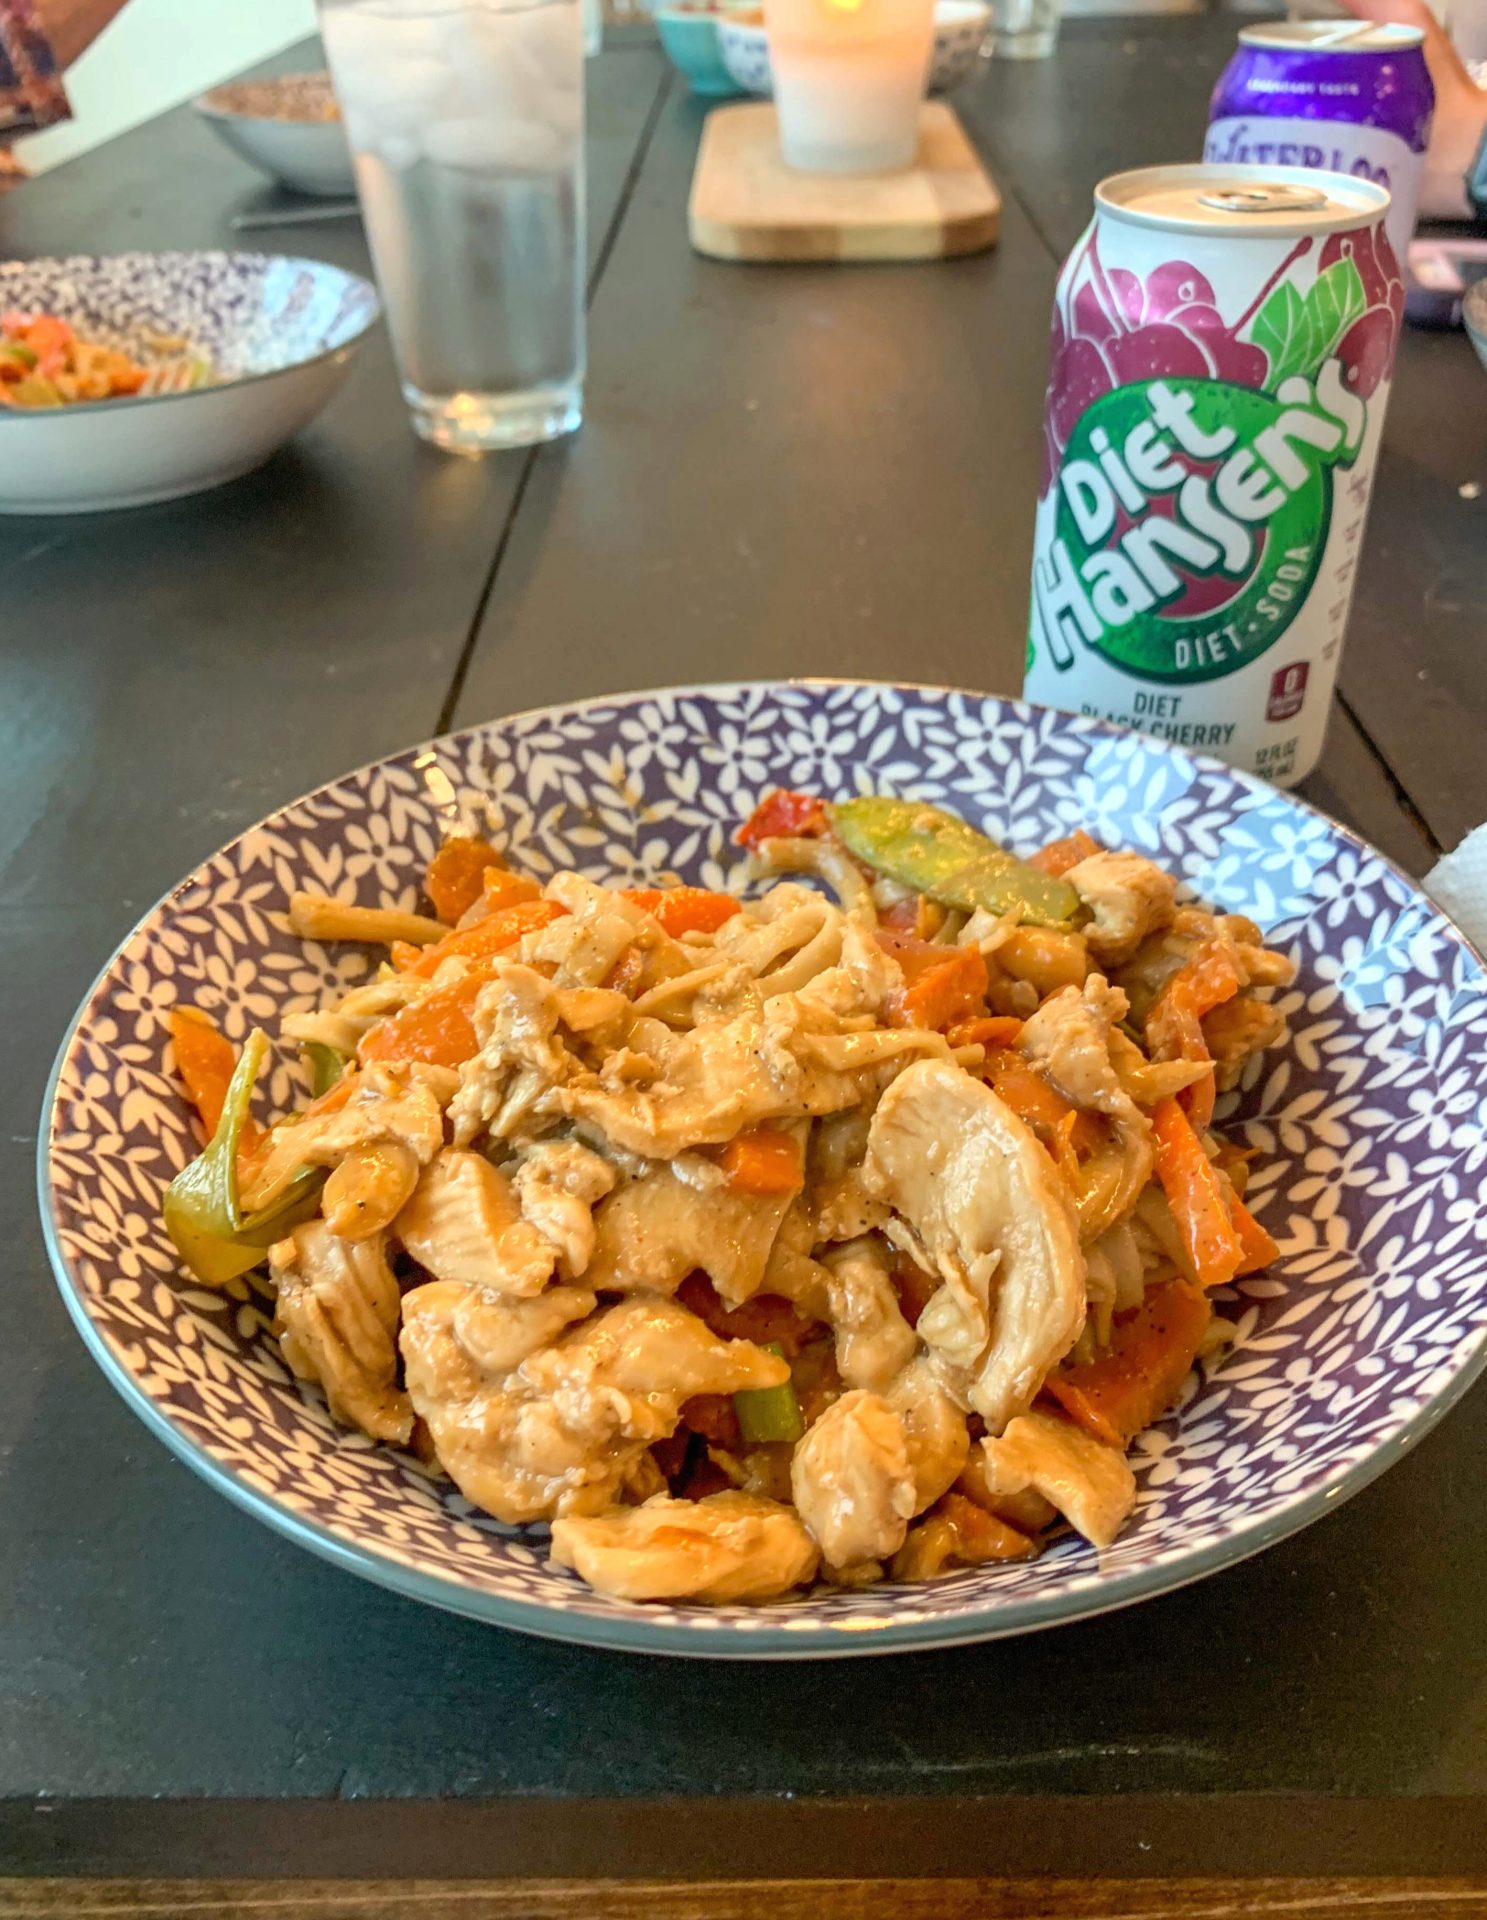 pad thai, gluten free, rice noodles, dinner, chicken, food, cooking, recipe, carrots, Thai recipe